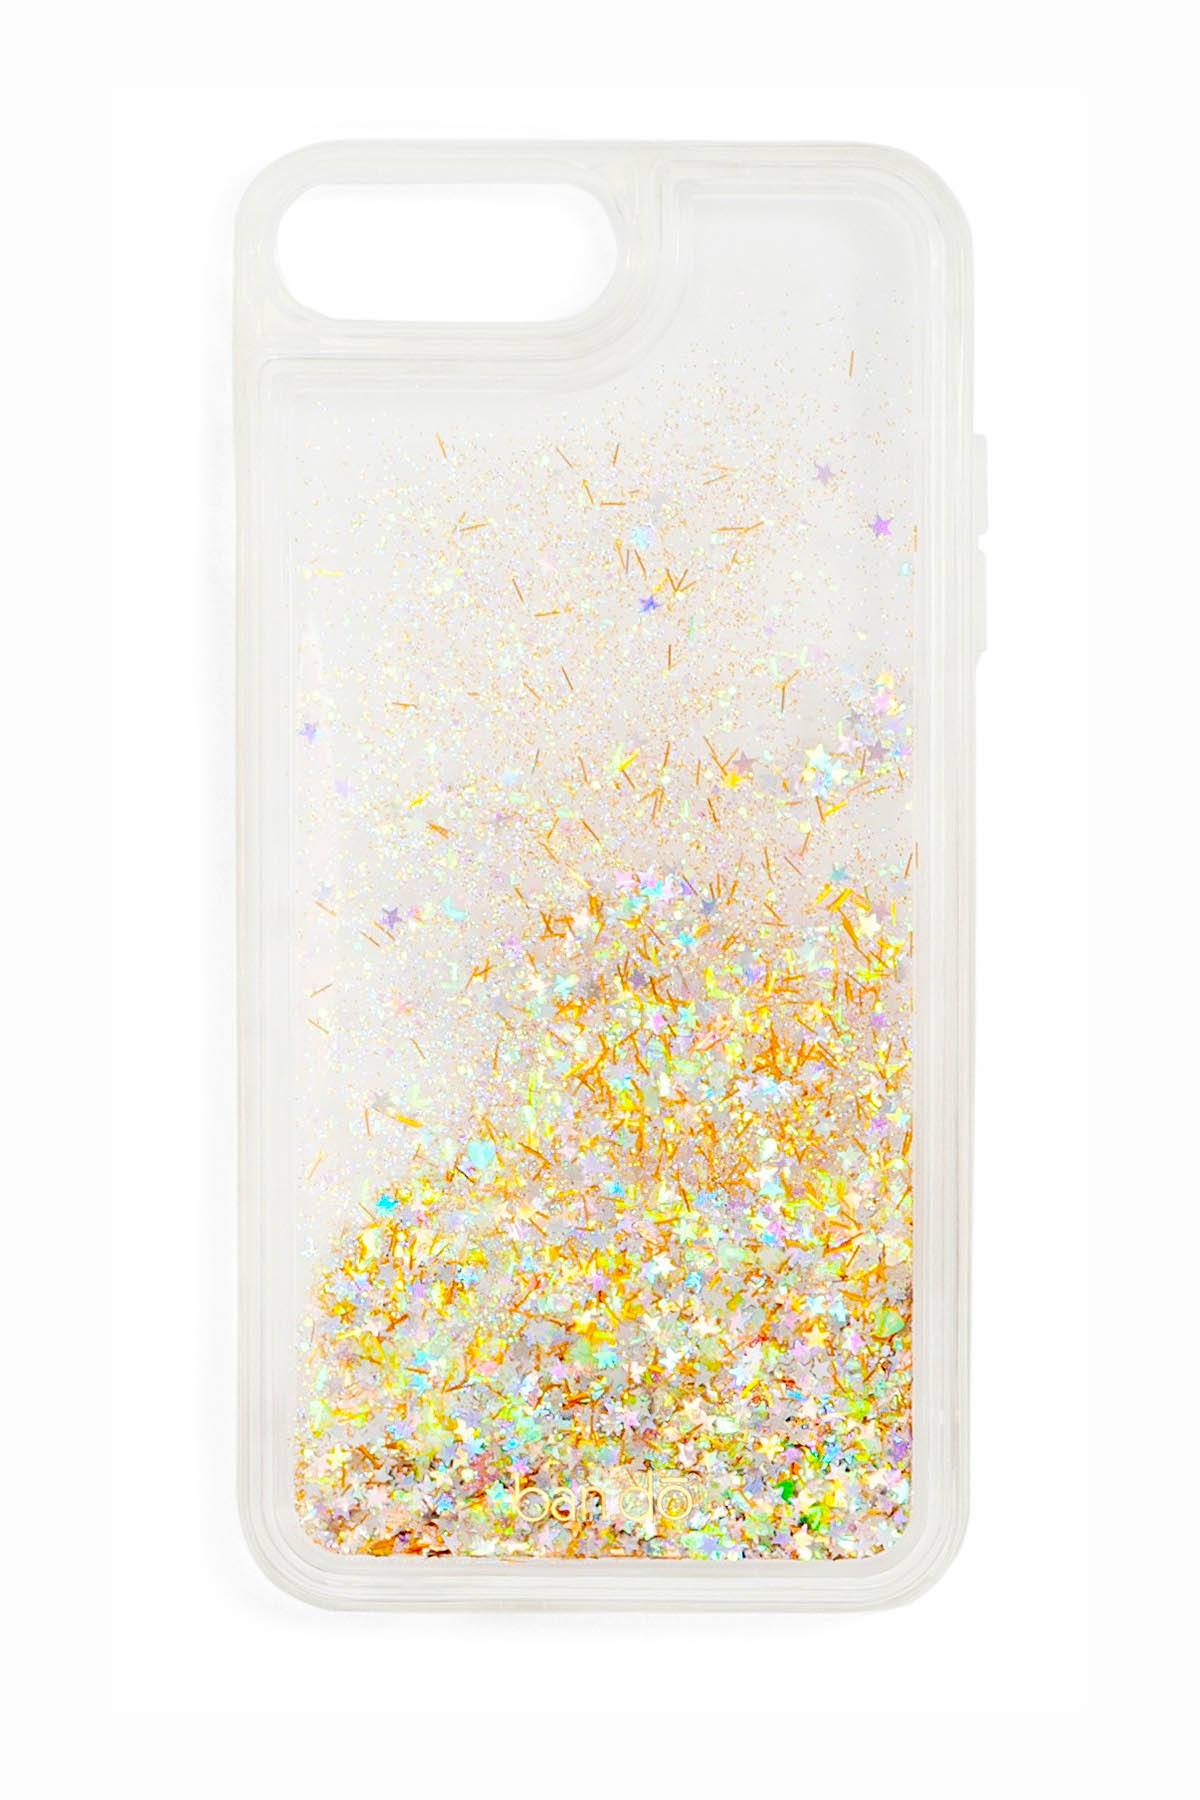 Ban.do Gold-Stardust Glitter-Bomb iPhone Case